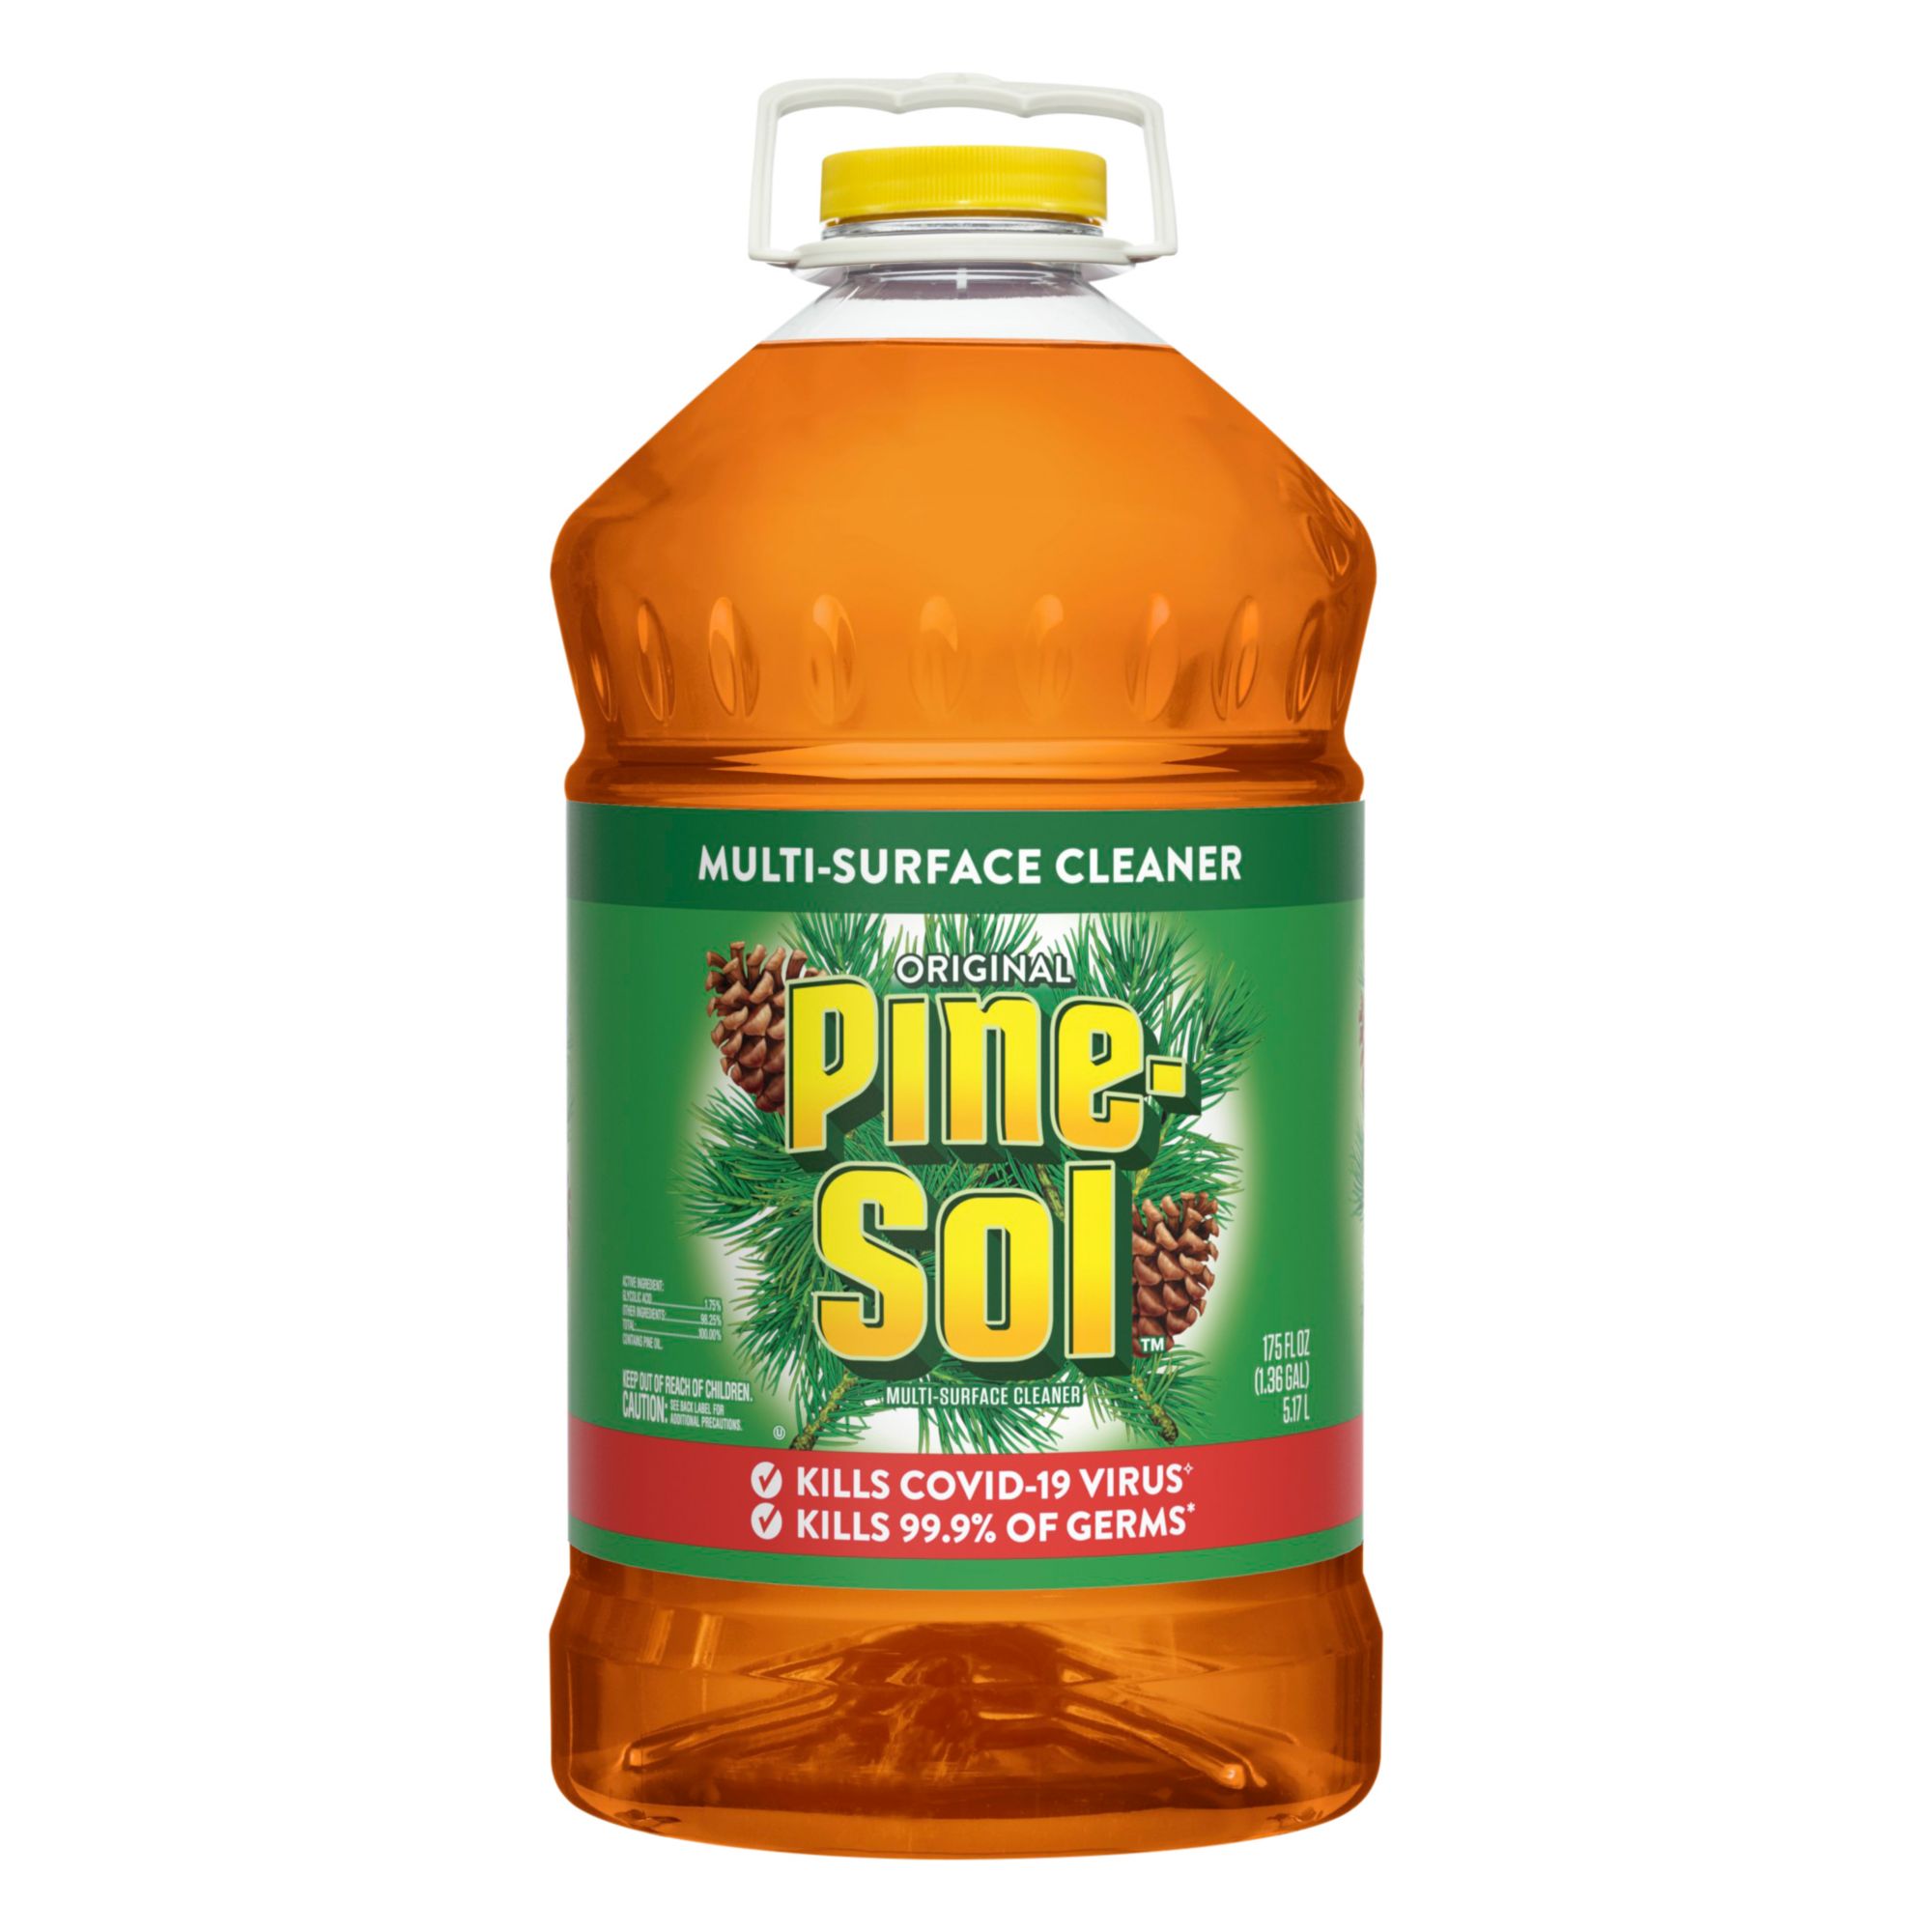 Pine-Sol Multi-Surface, 175 oz.